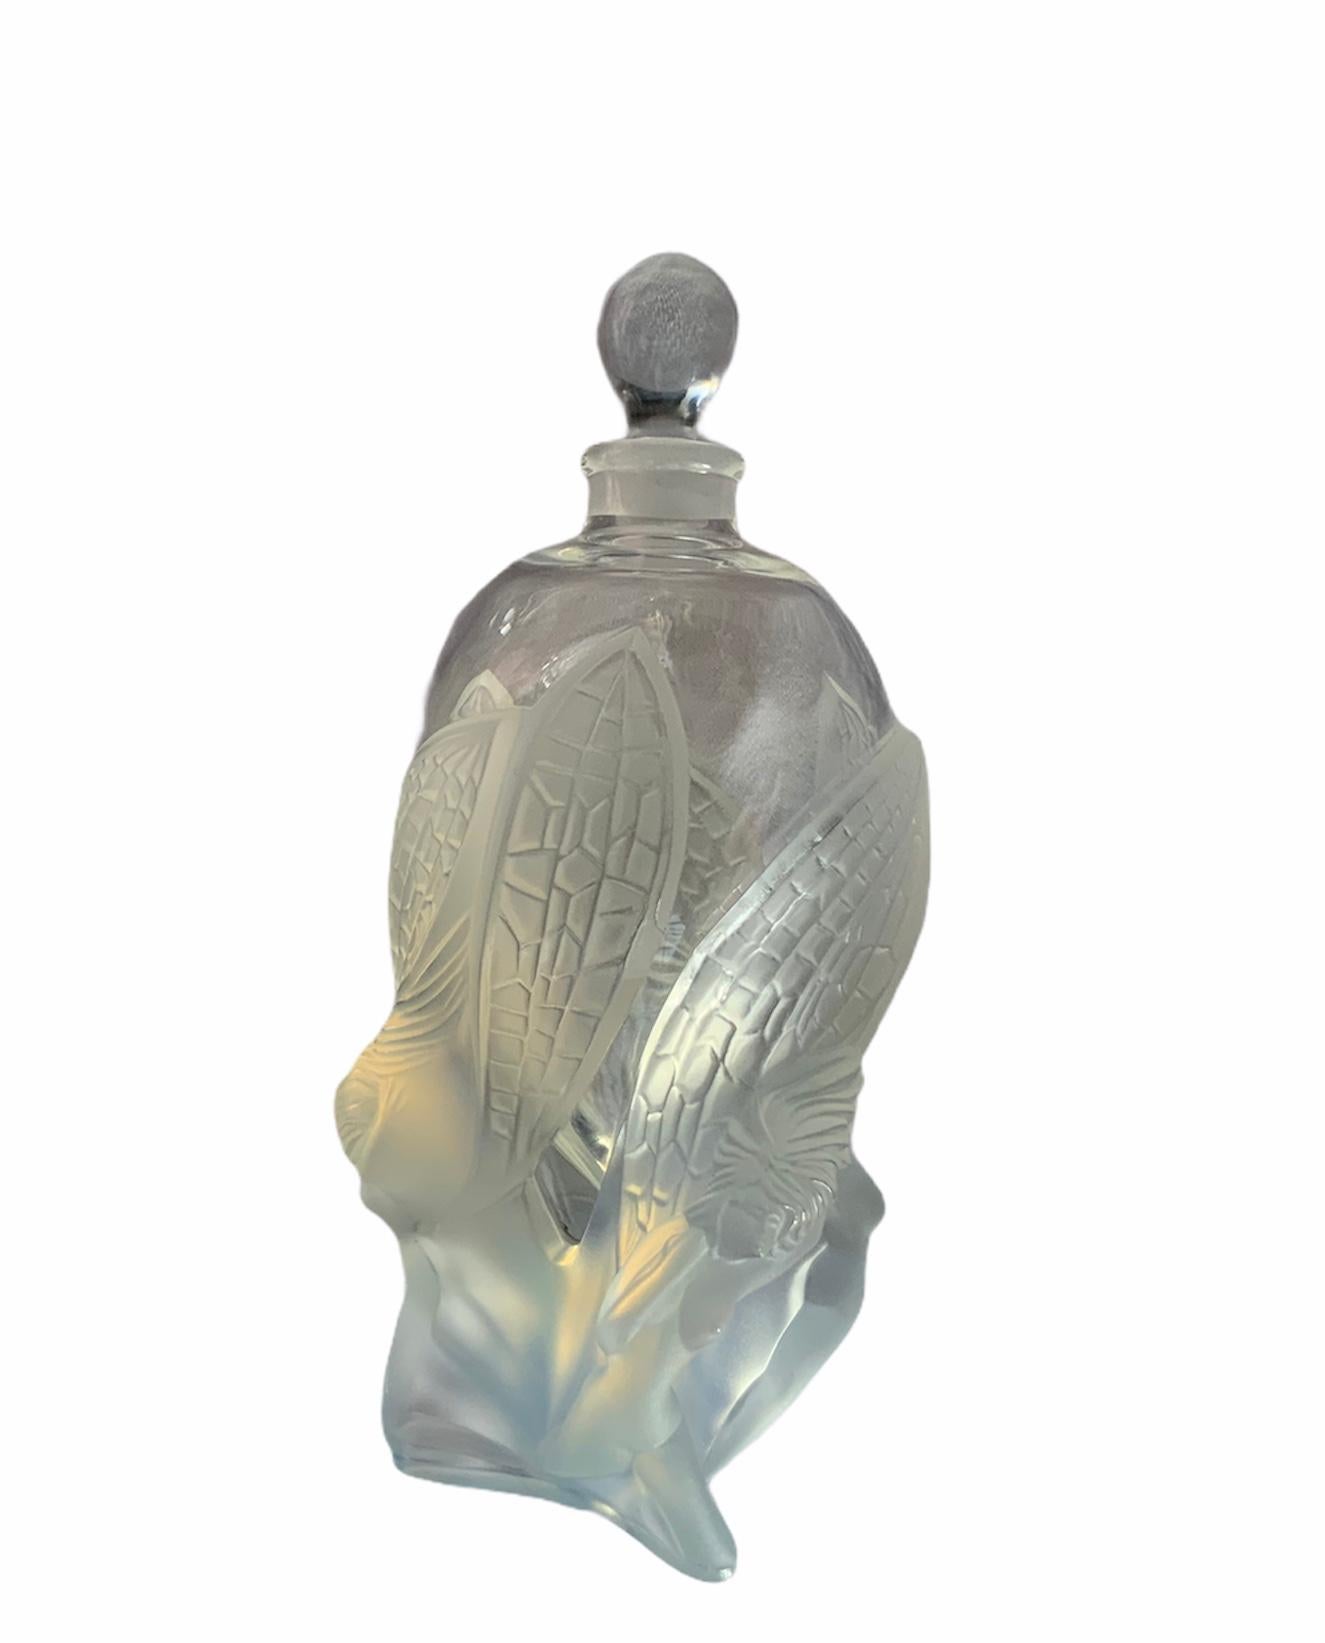 Molded Lalique Crystal Les Elfes Perfume Factice Bottle